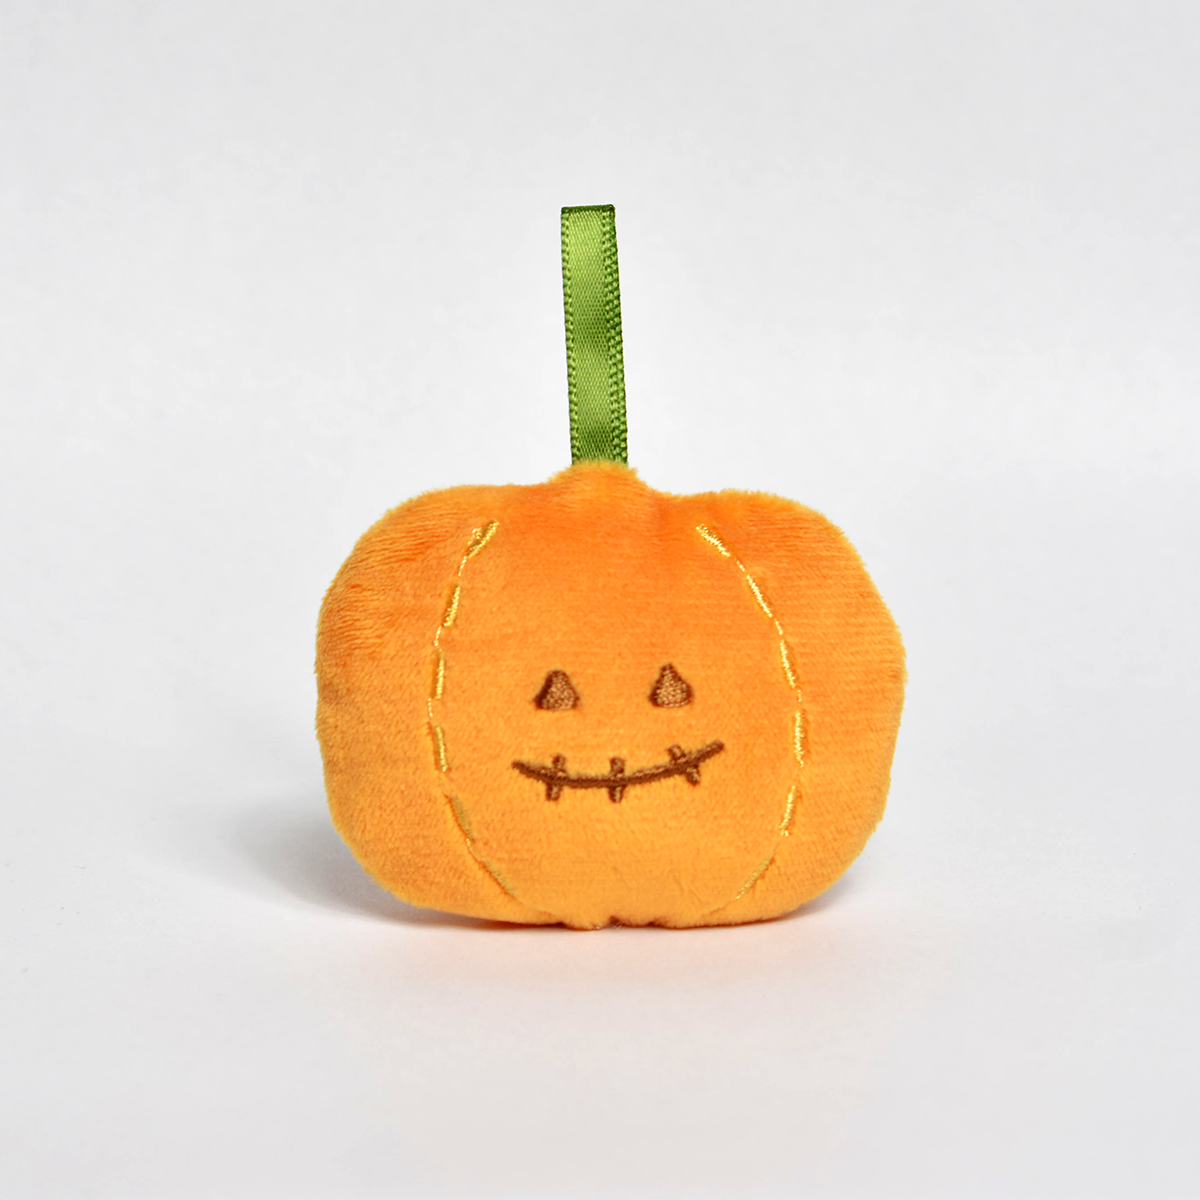 amifa Halloween Stuffed Toy Ornament Small - Orange / Yellow Pumpkin